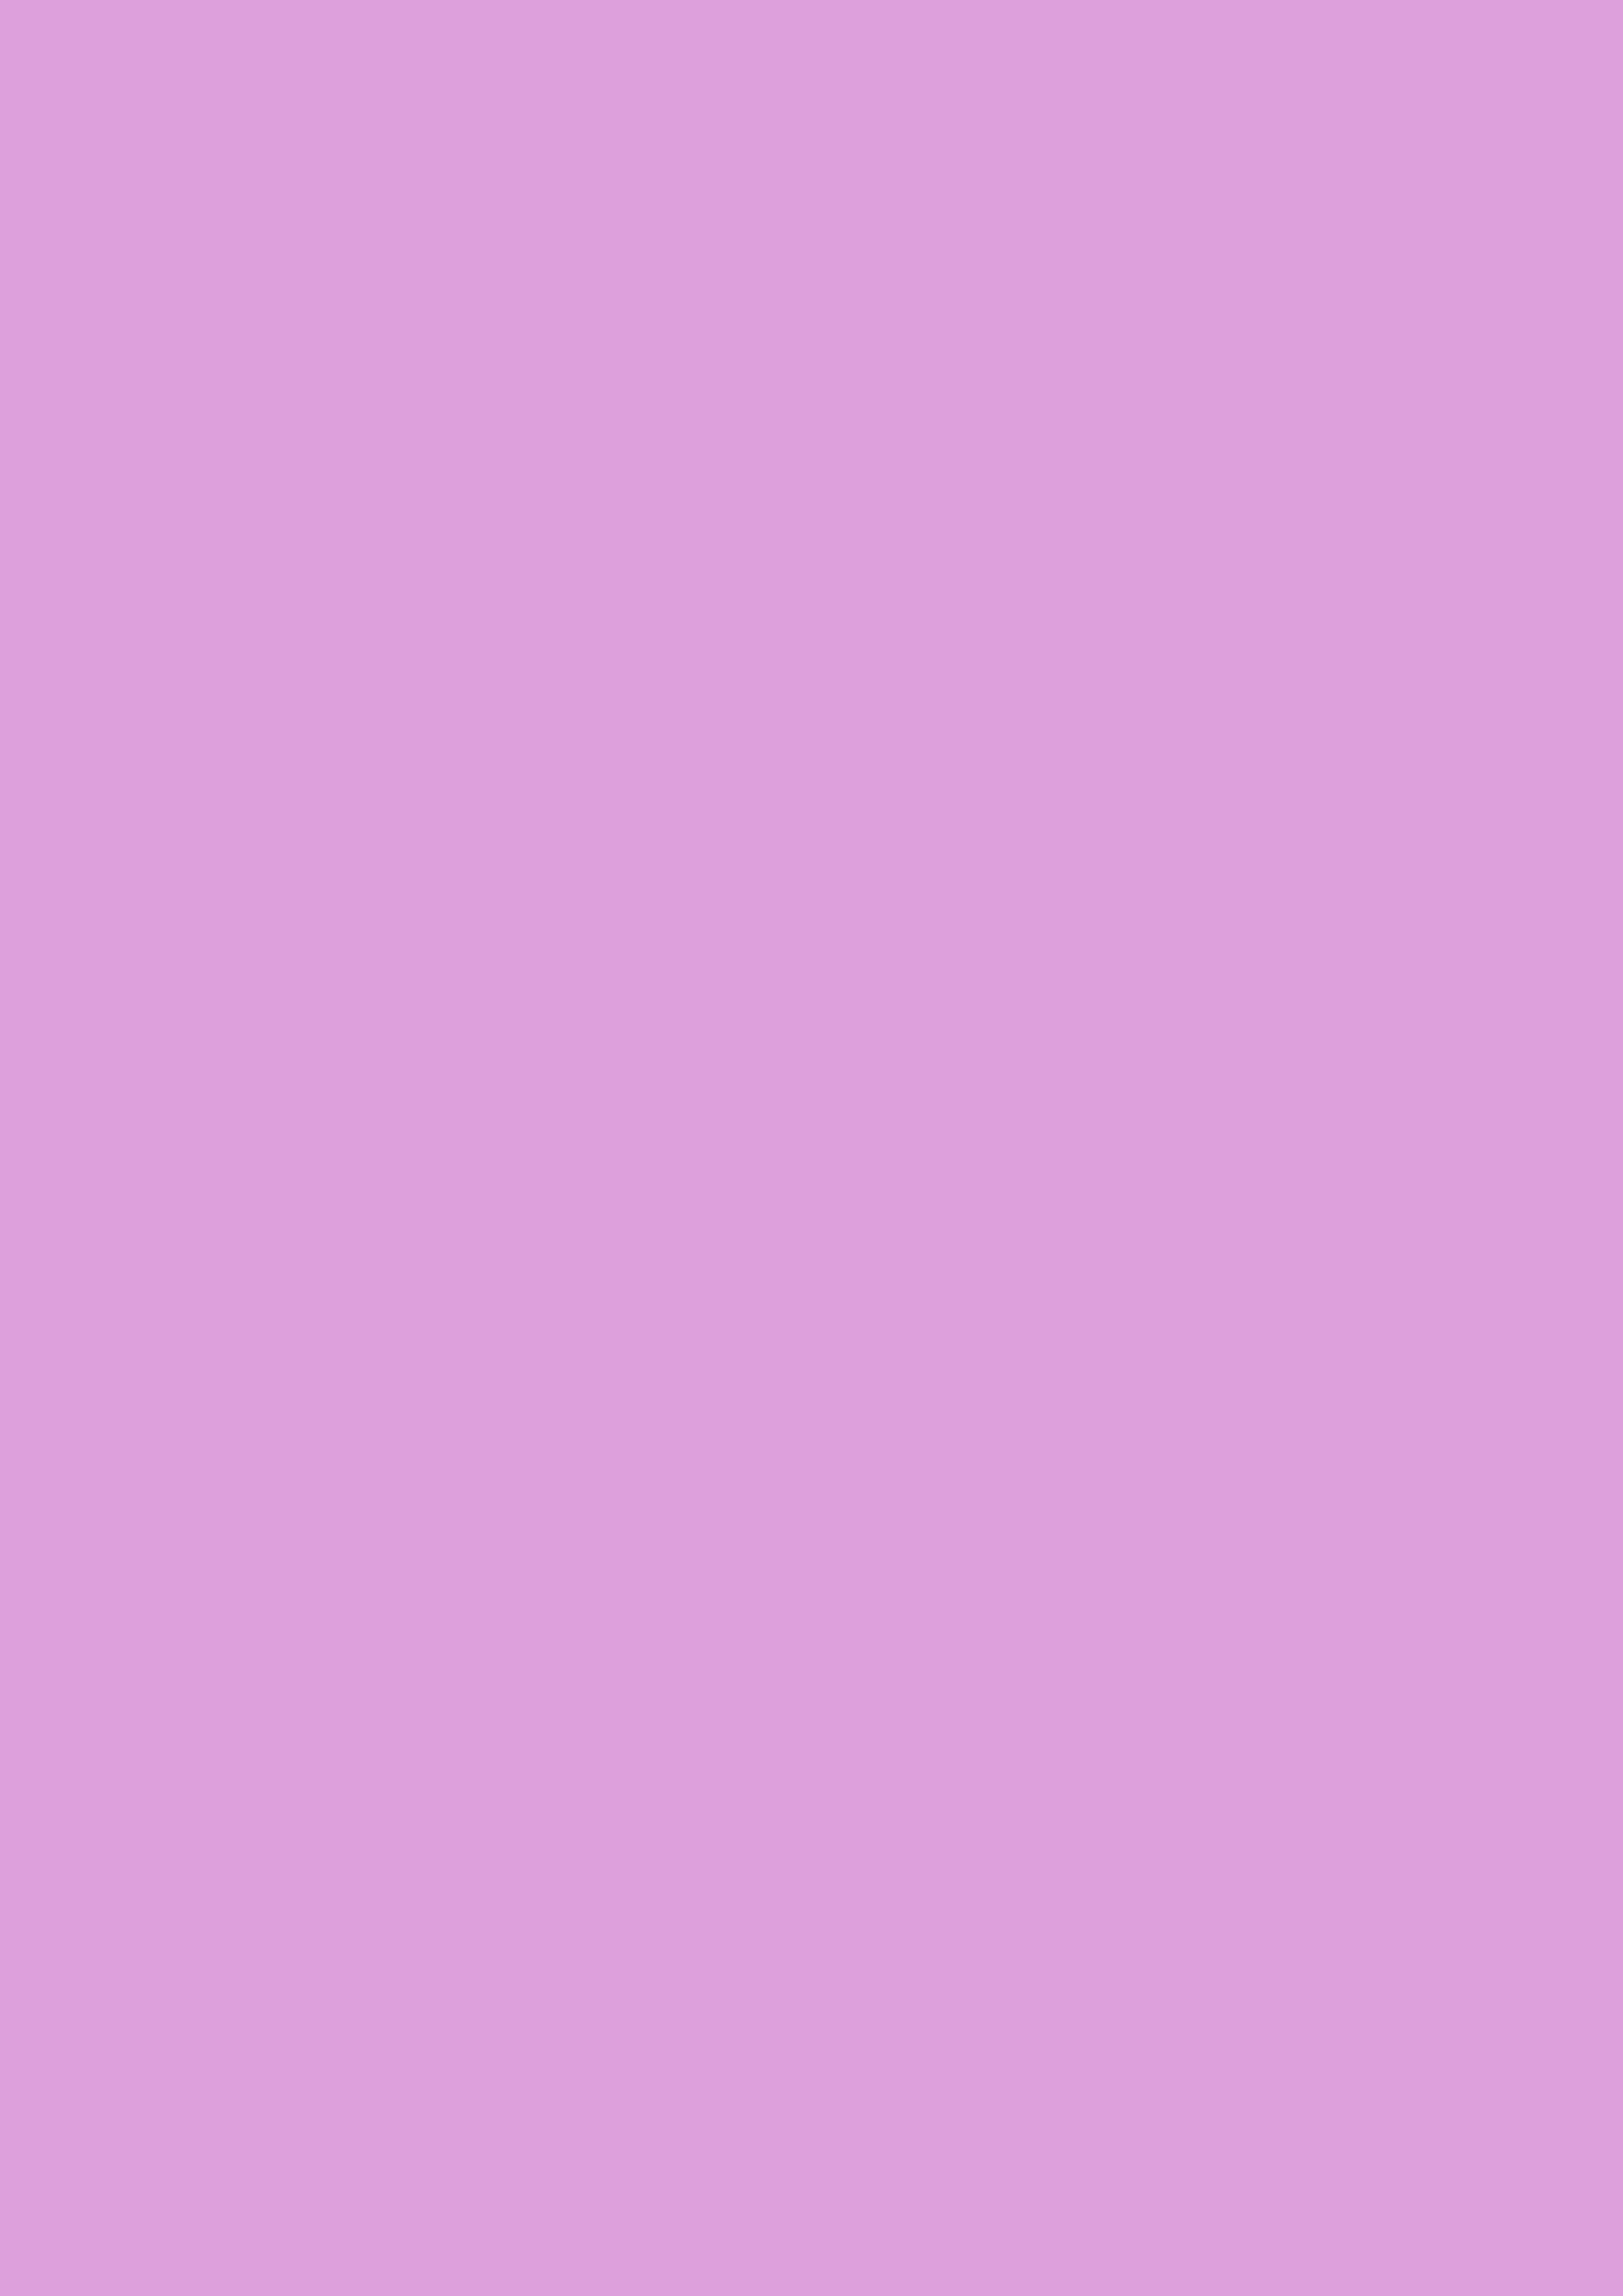 2480x3508 Medium Lavender Magenta Solid Color Background